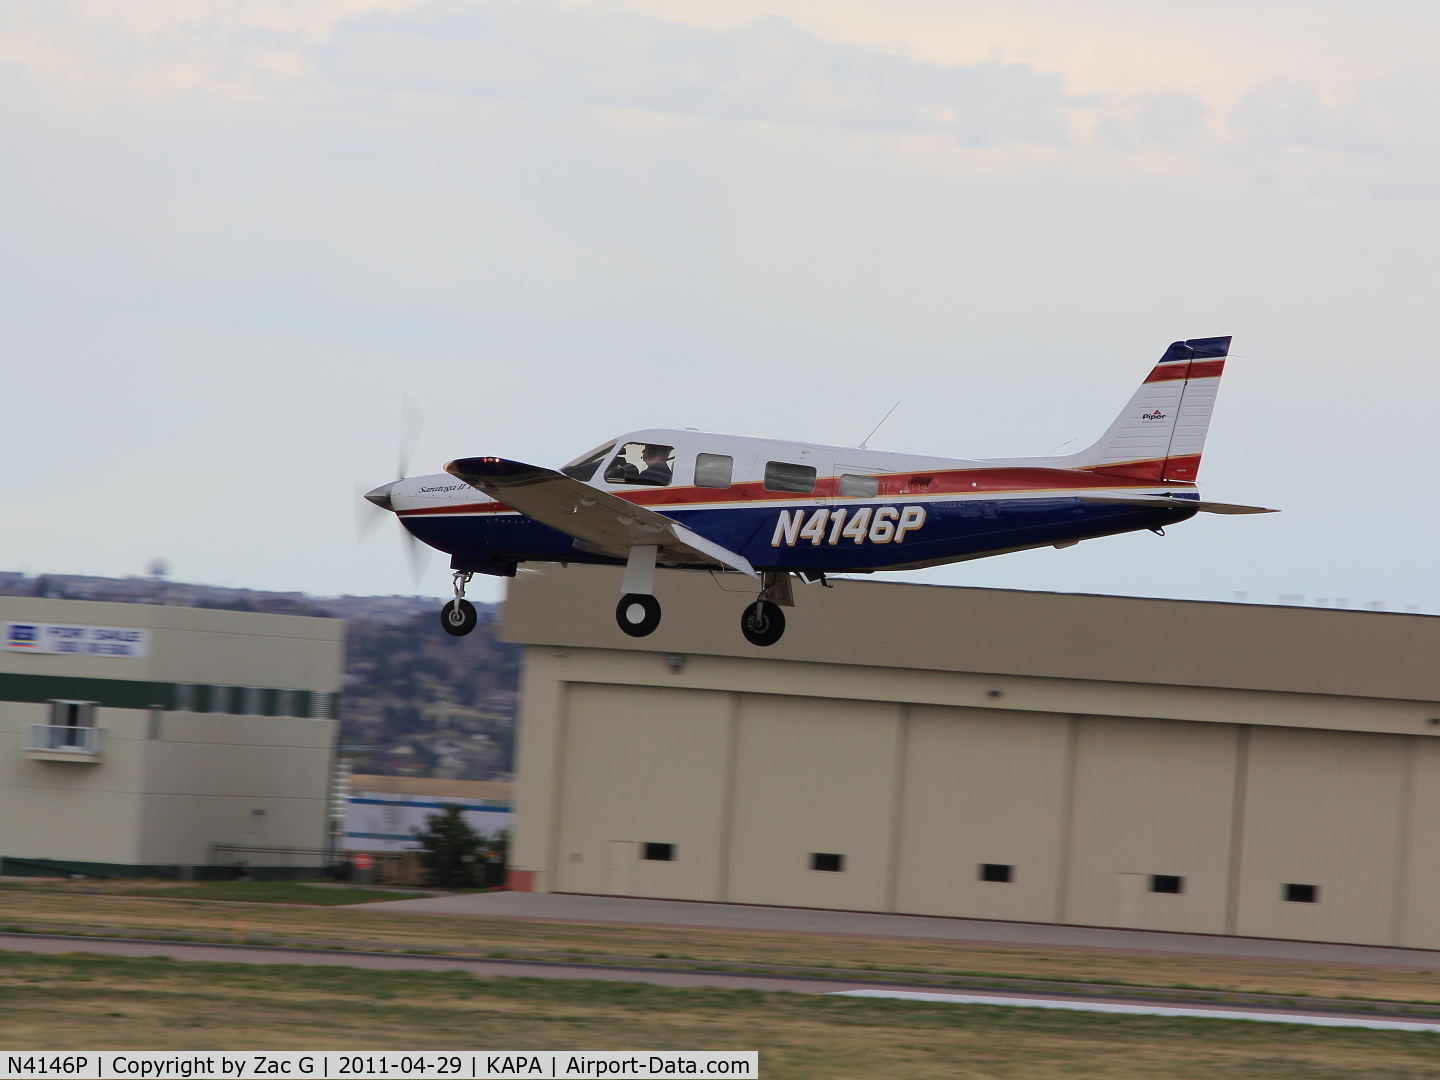 N4146P, 1999 Piper PA-32R-301T Turbo Saratoga C/N 3257106, Landing on 35L.